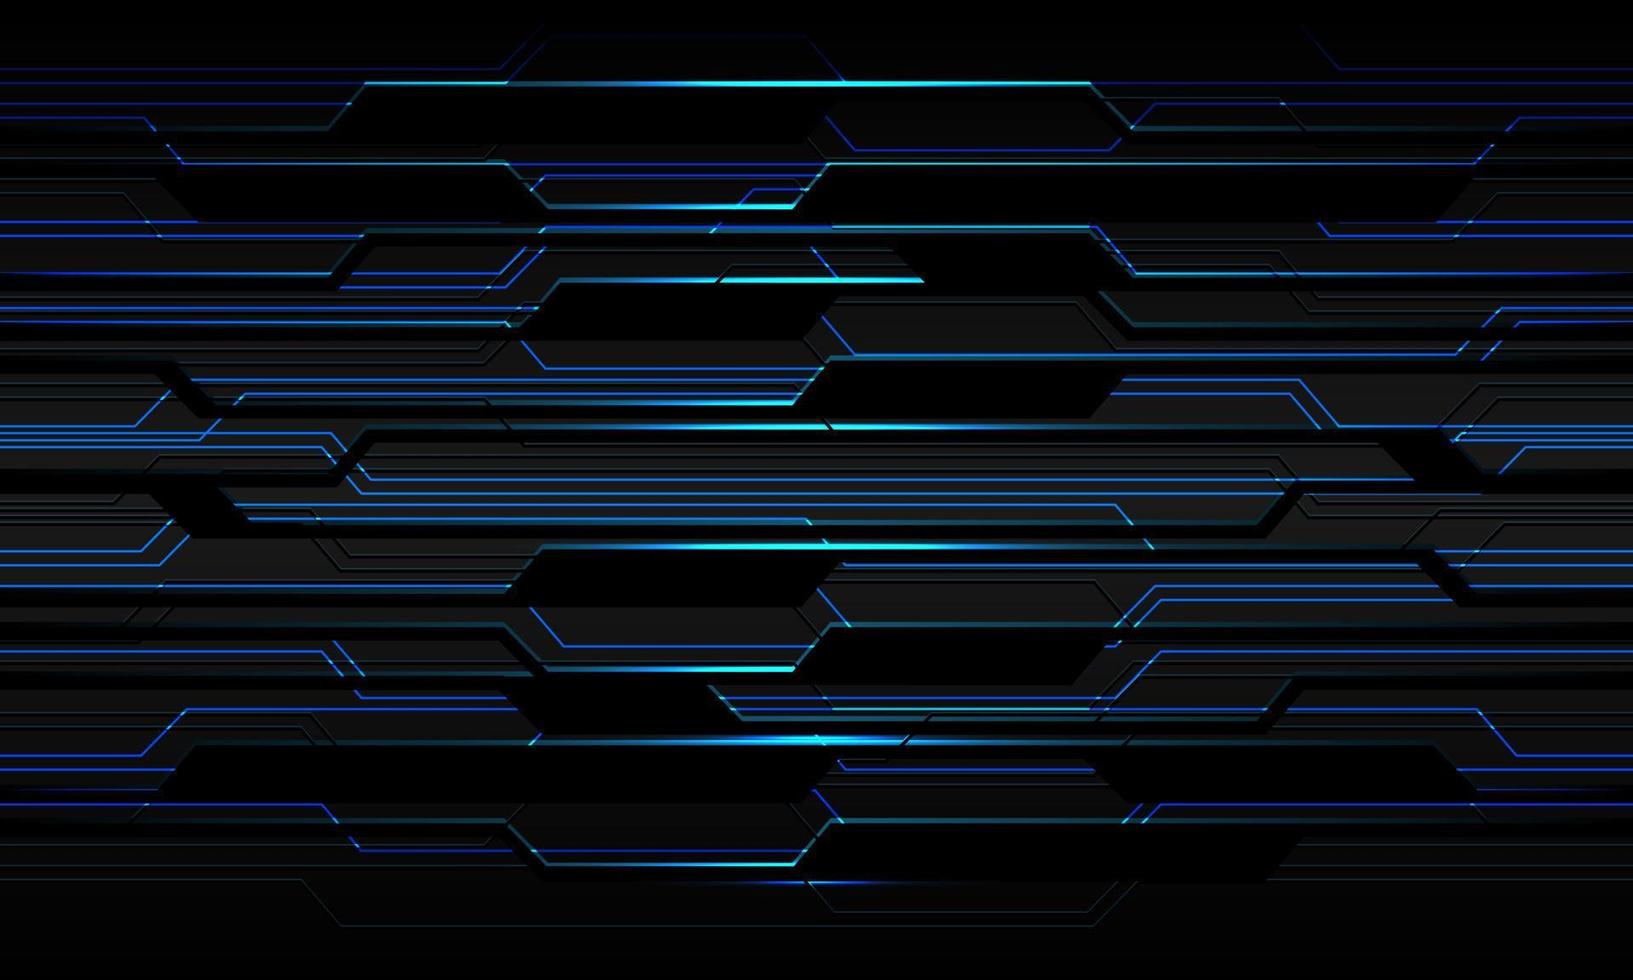 abstract donker grijs metalen blauw licht zwart stroomkring cyber meetkundig ontwerp modern futuristische technologie achtergrond vector